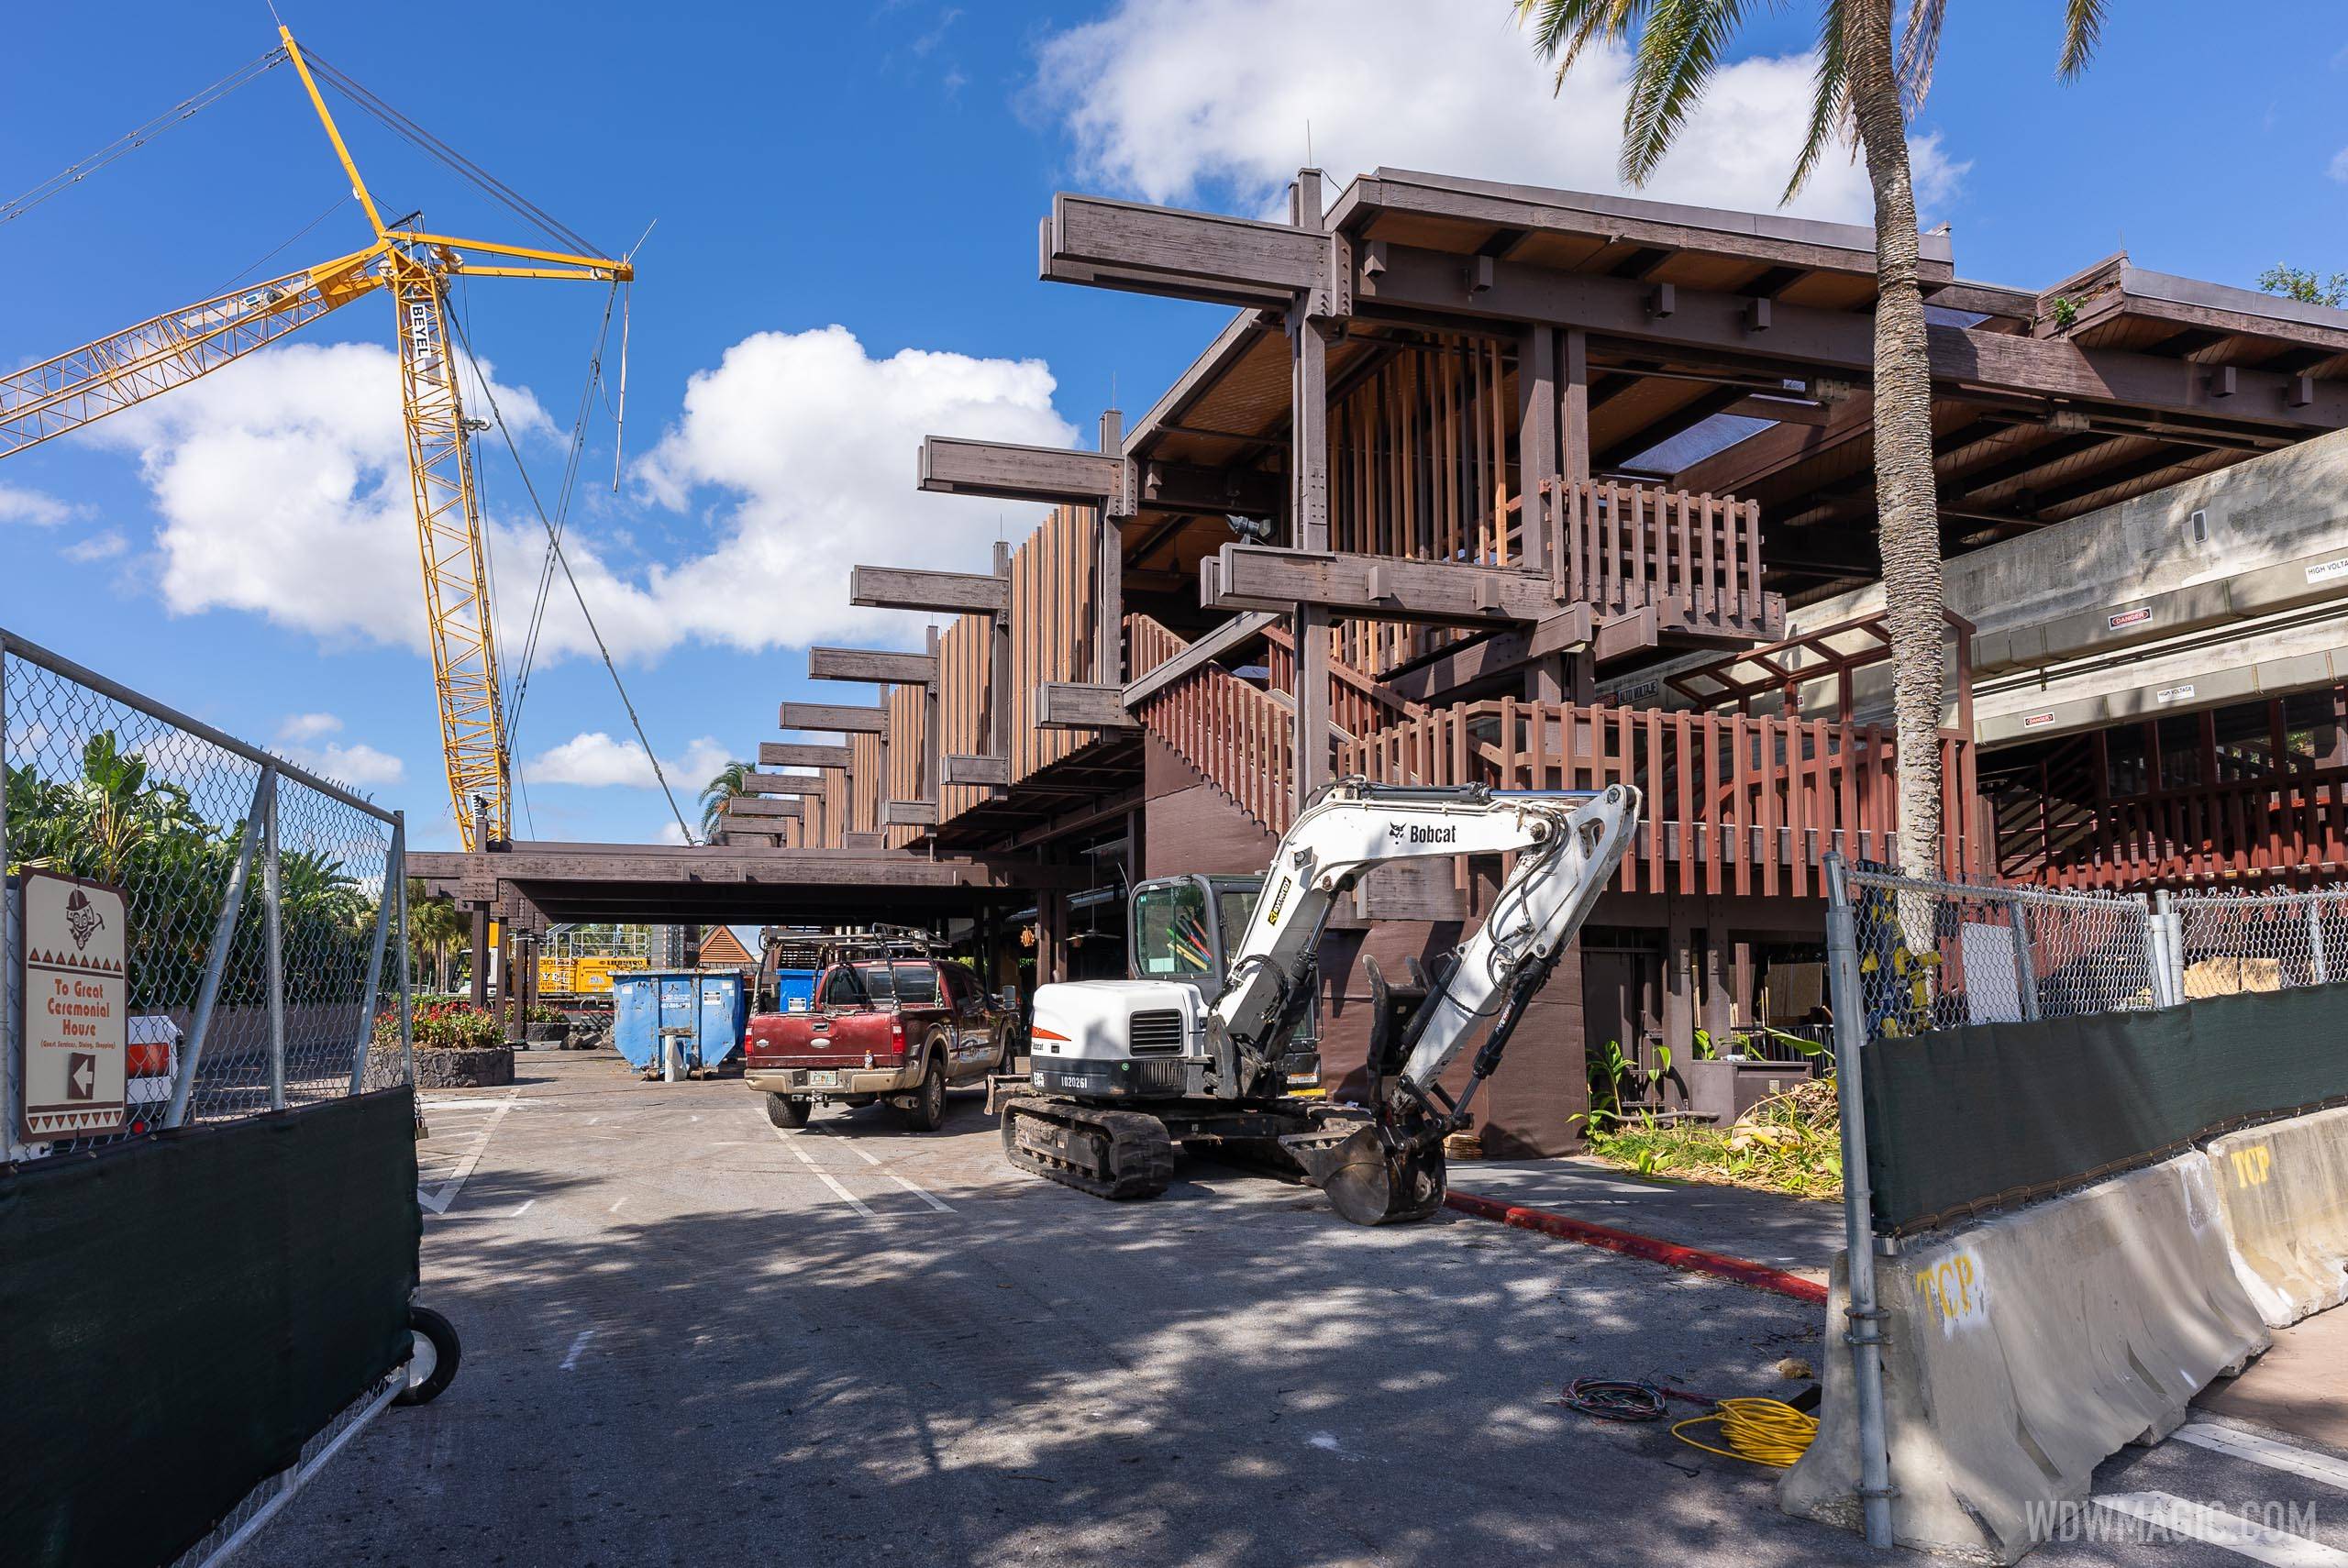 PHOTOS - Latest refurbishment progress at Disney's Polynesian Resort